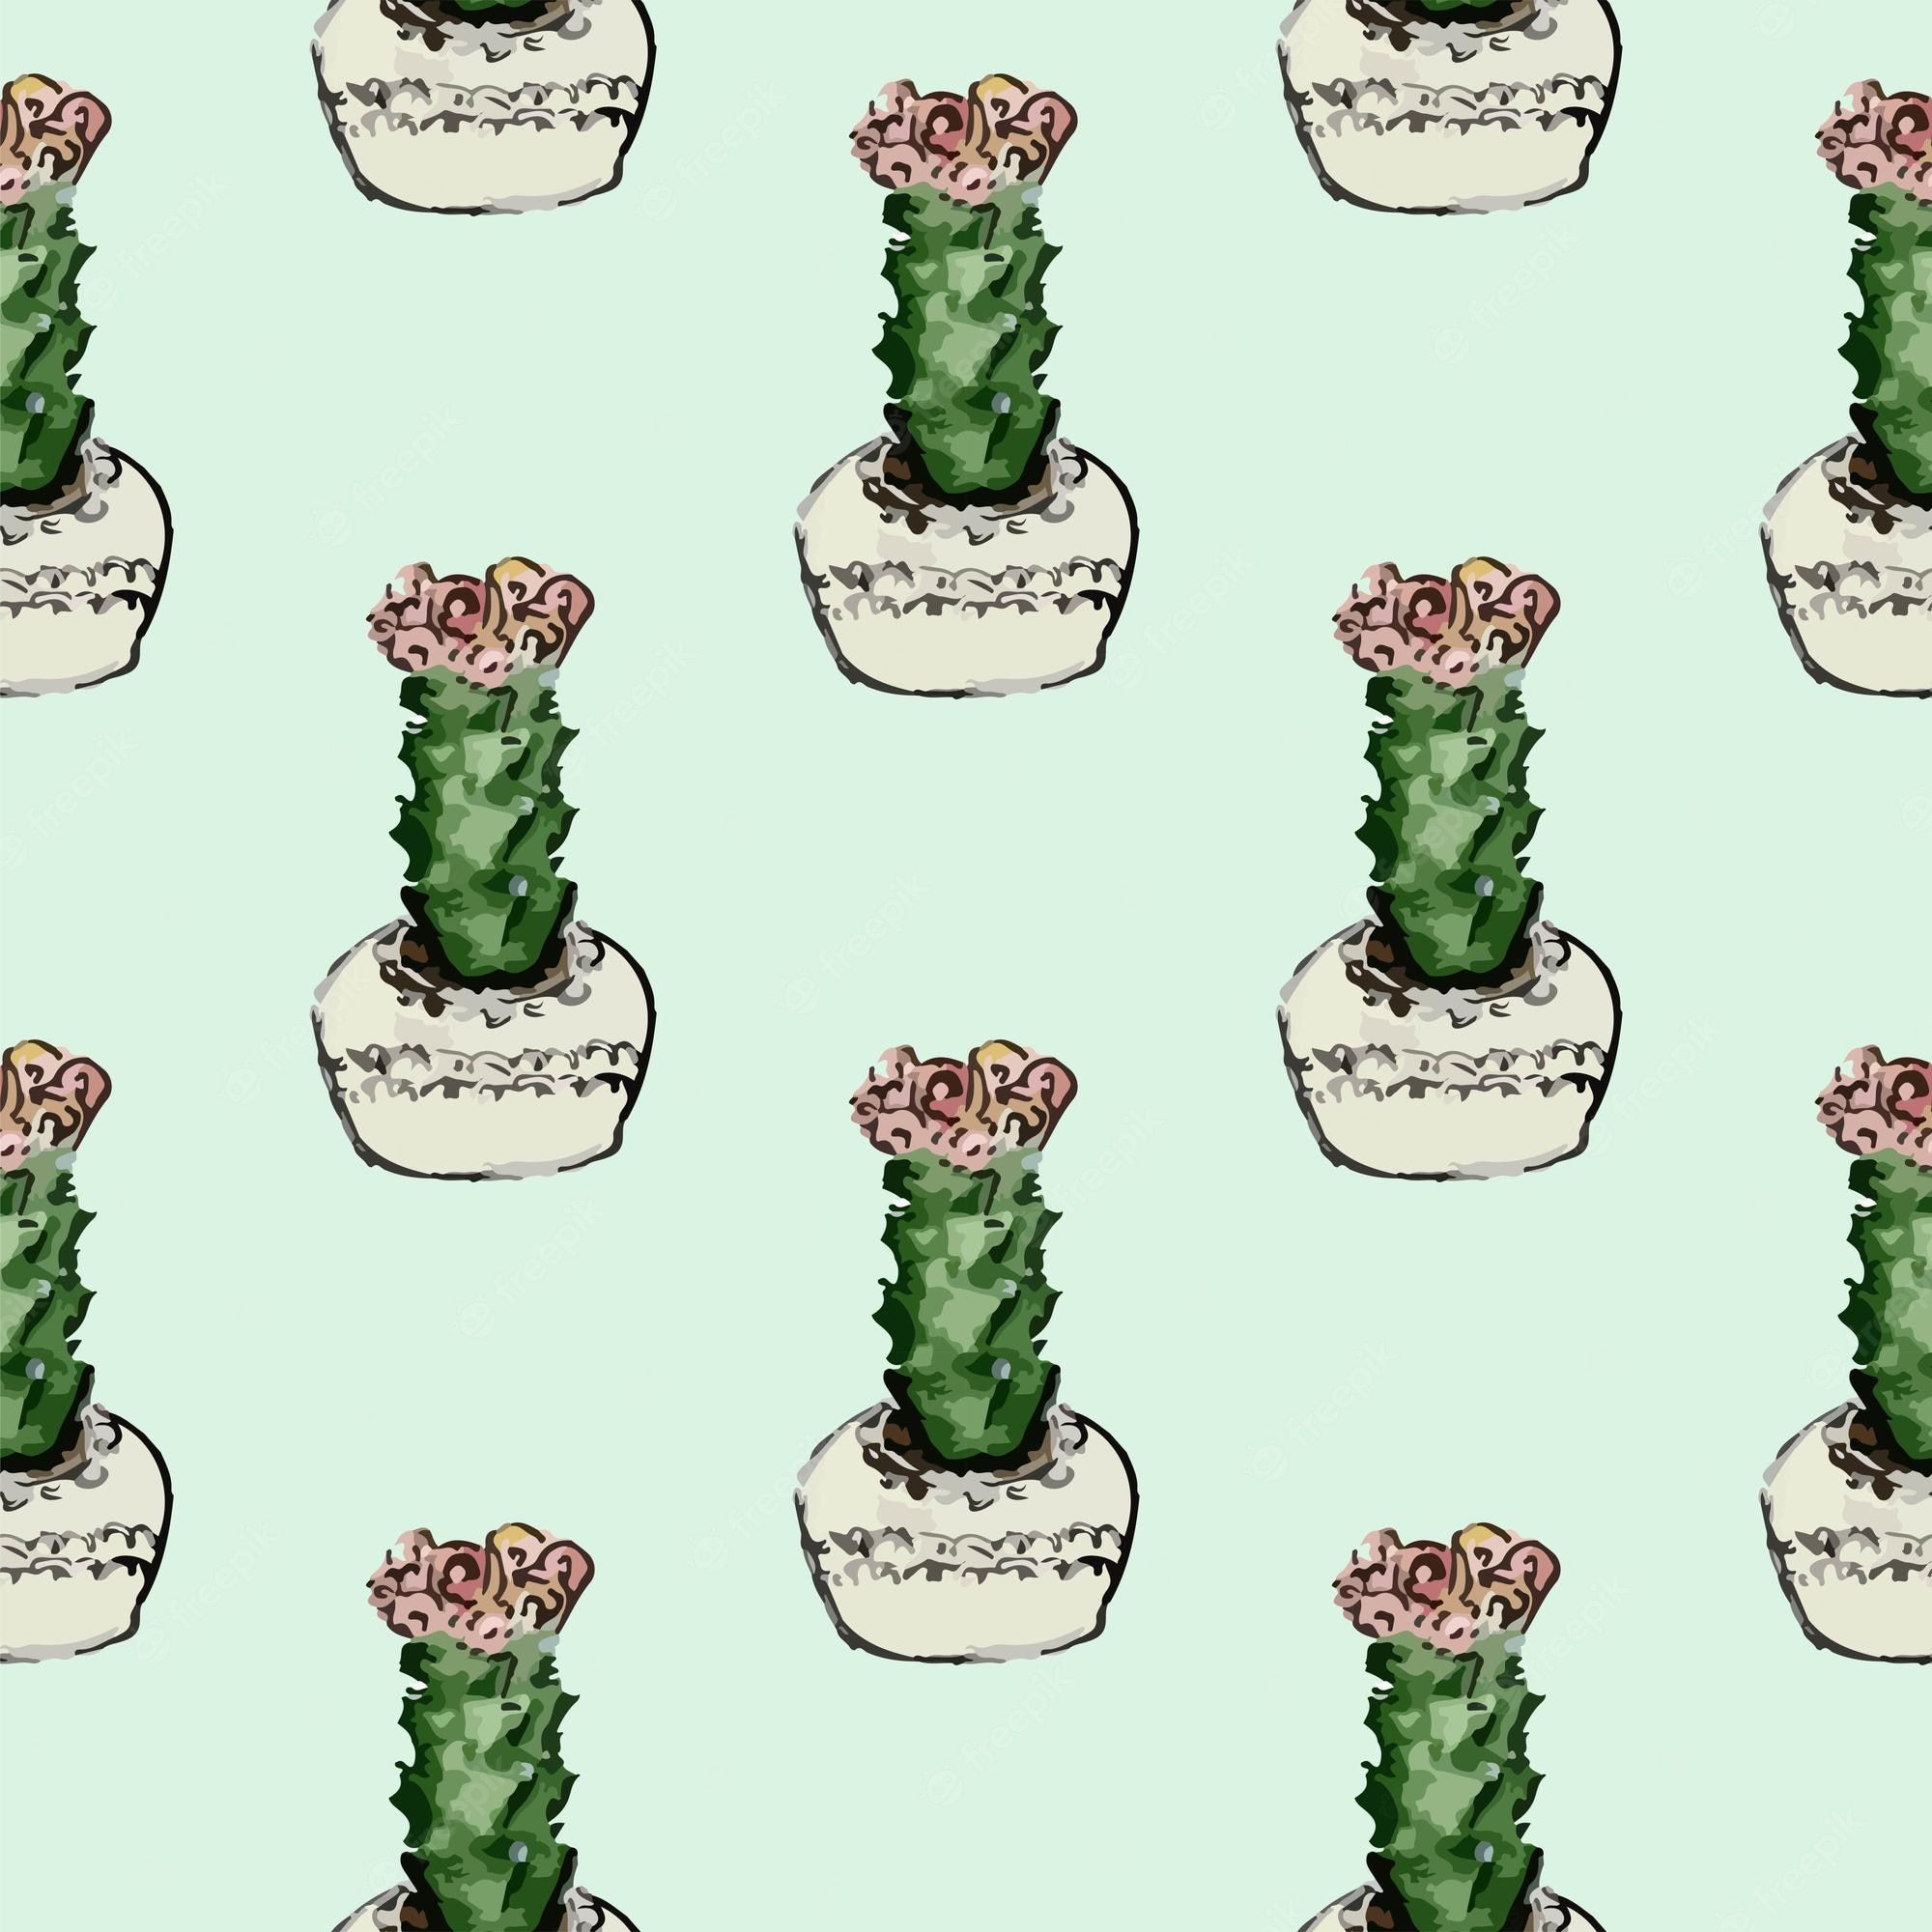 Cactus wallpaper Vectors & Illustrations for Free Download